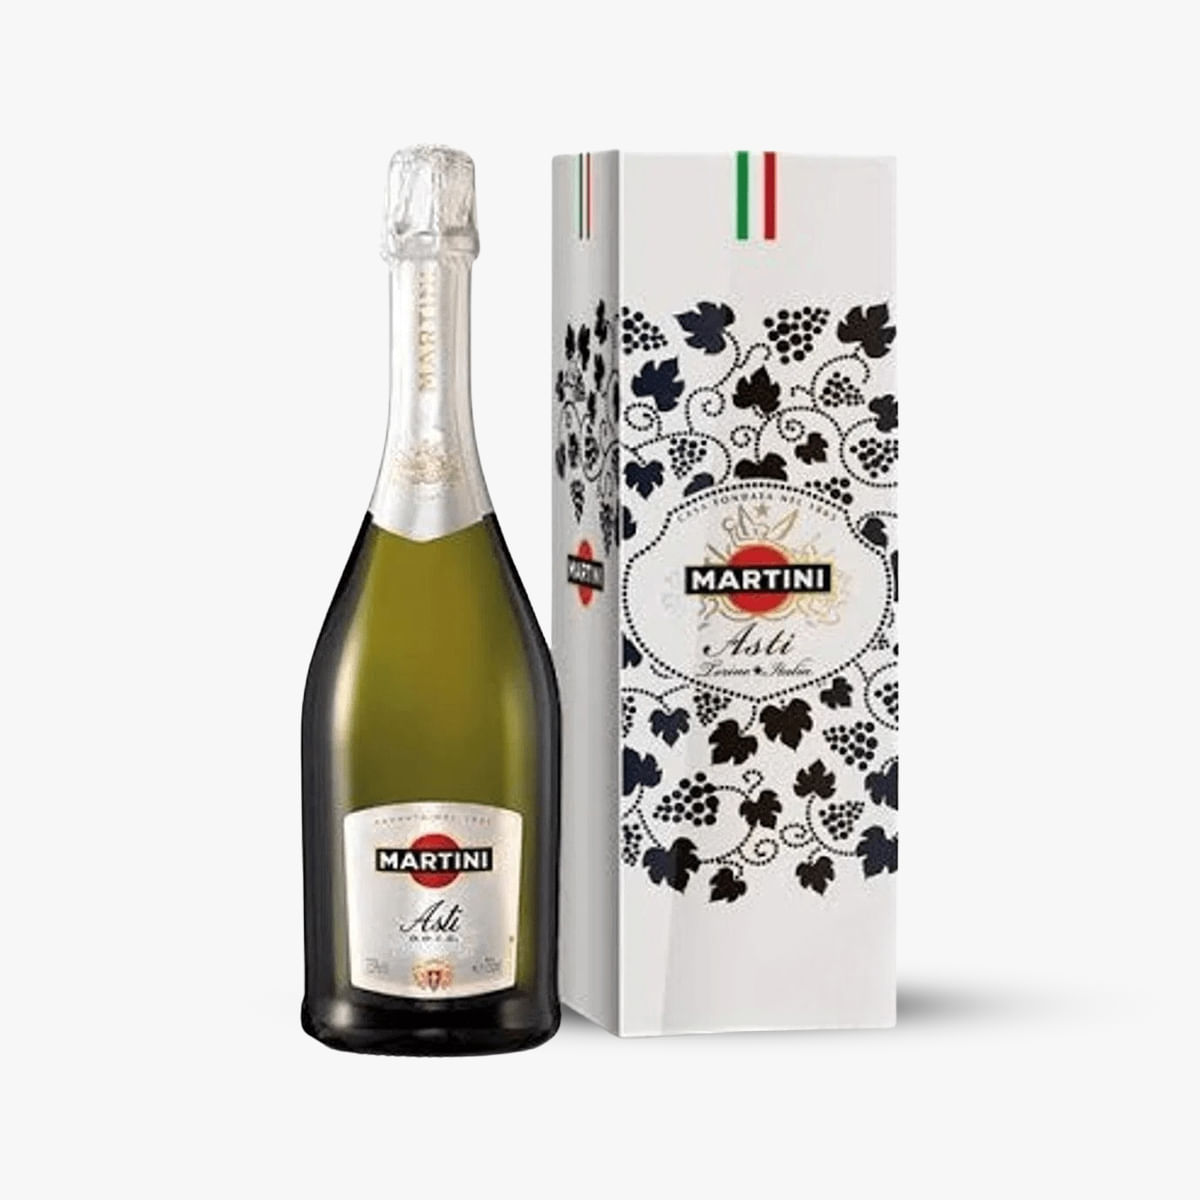 Martini Asti Gift Box